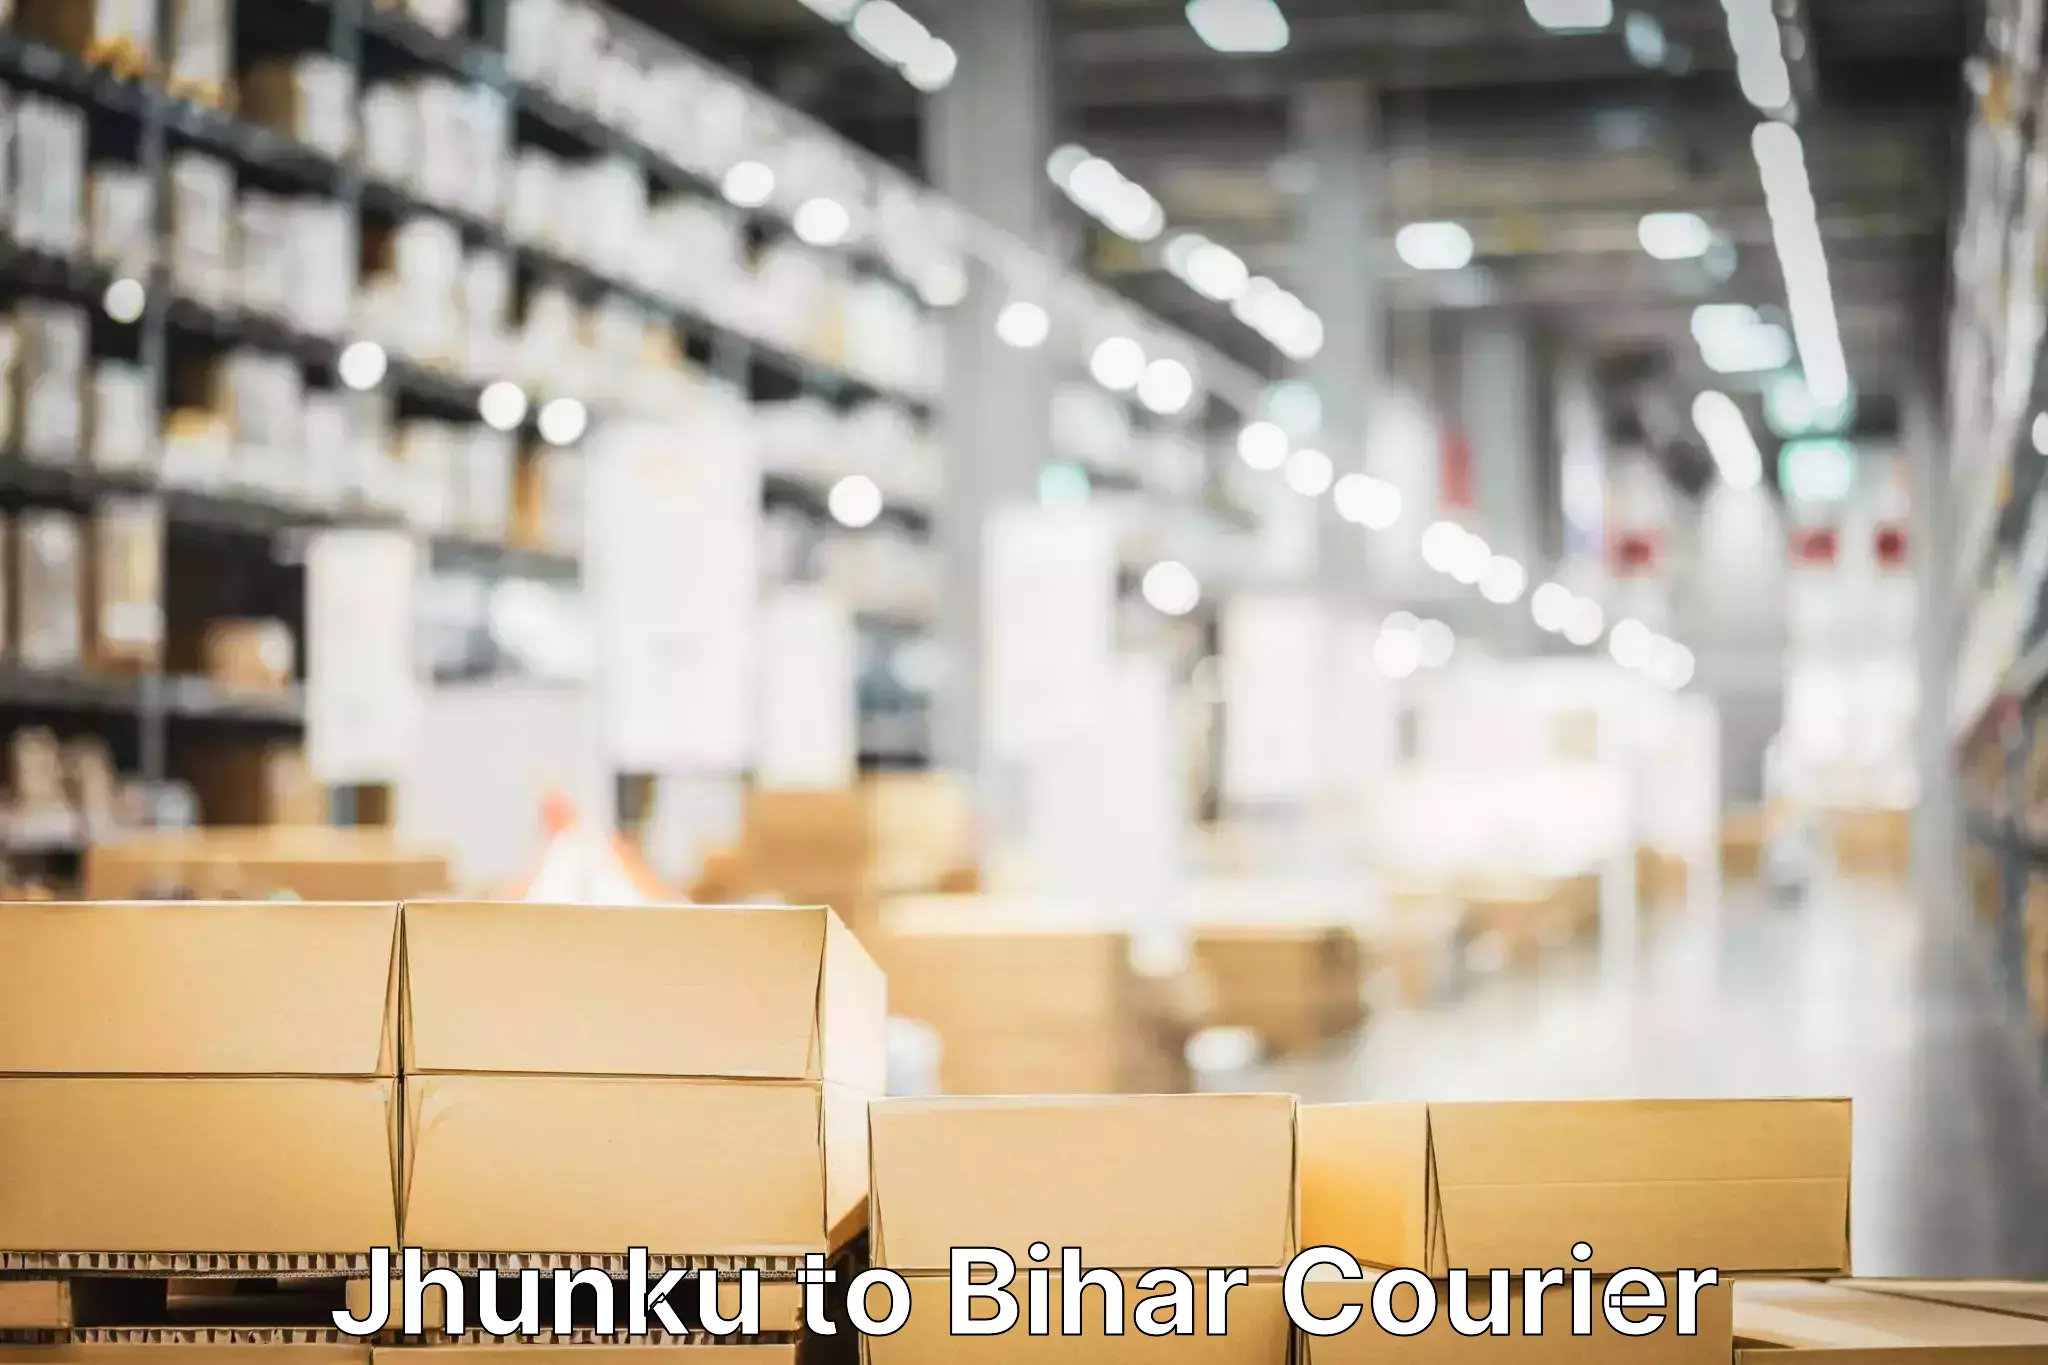 Premium courier solutions Jhunku to Bihar